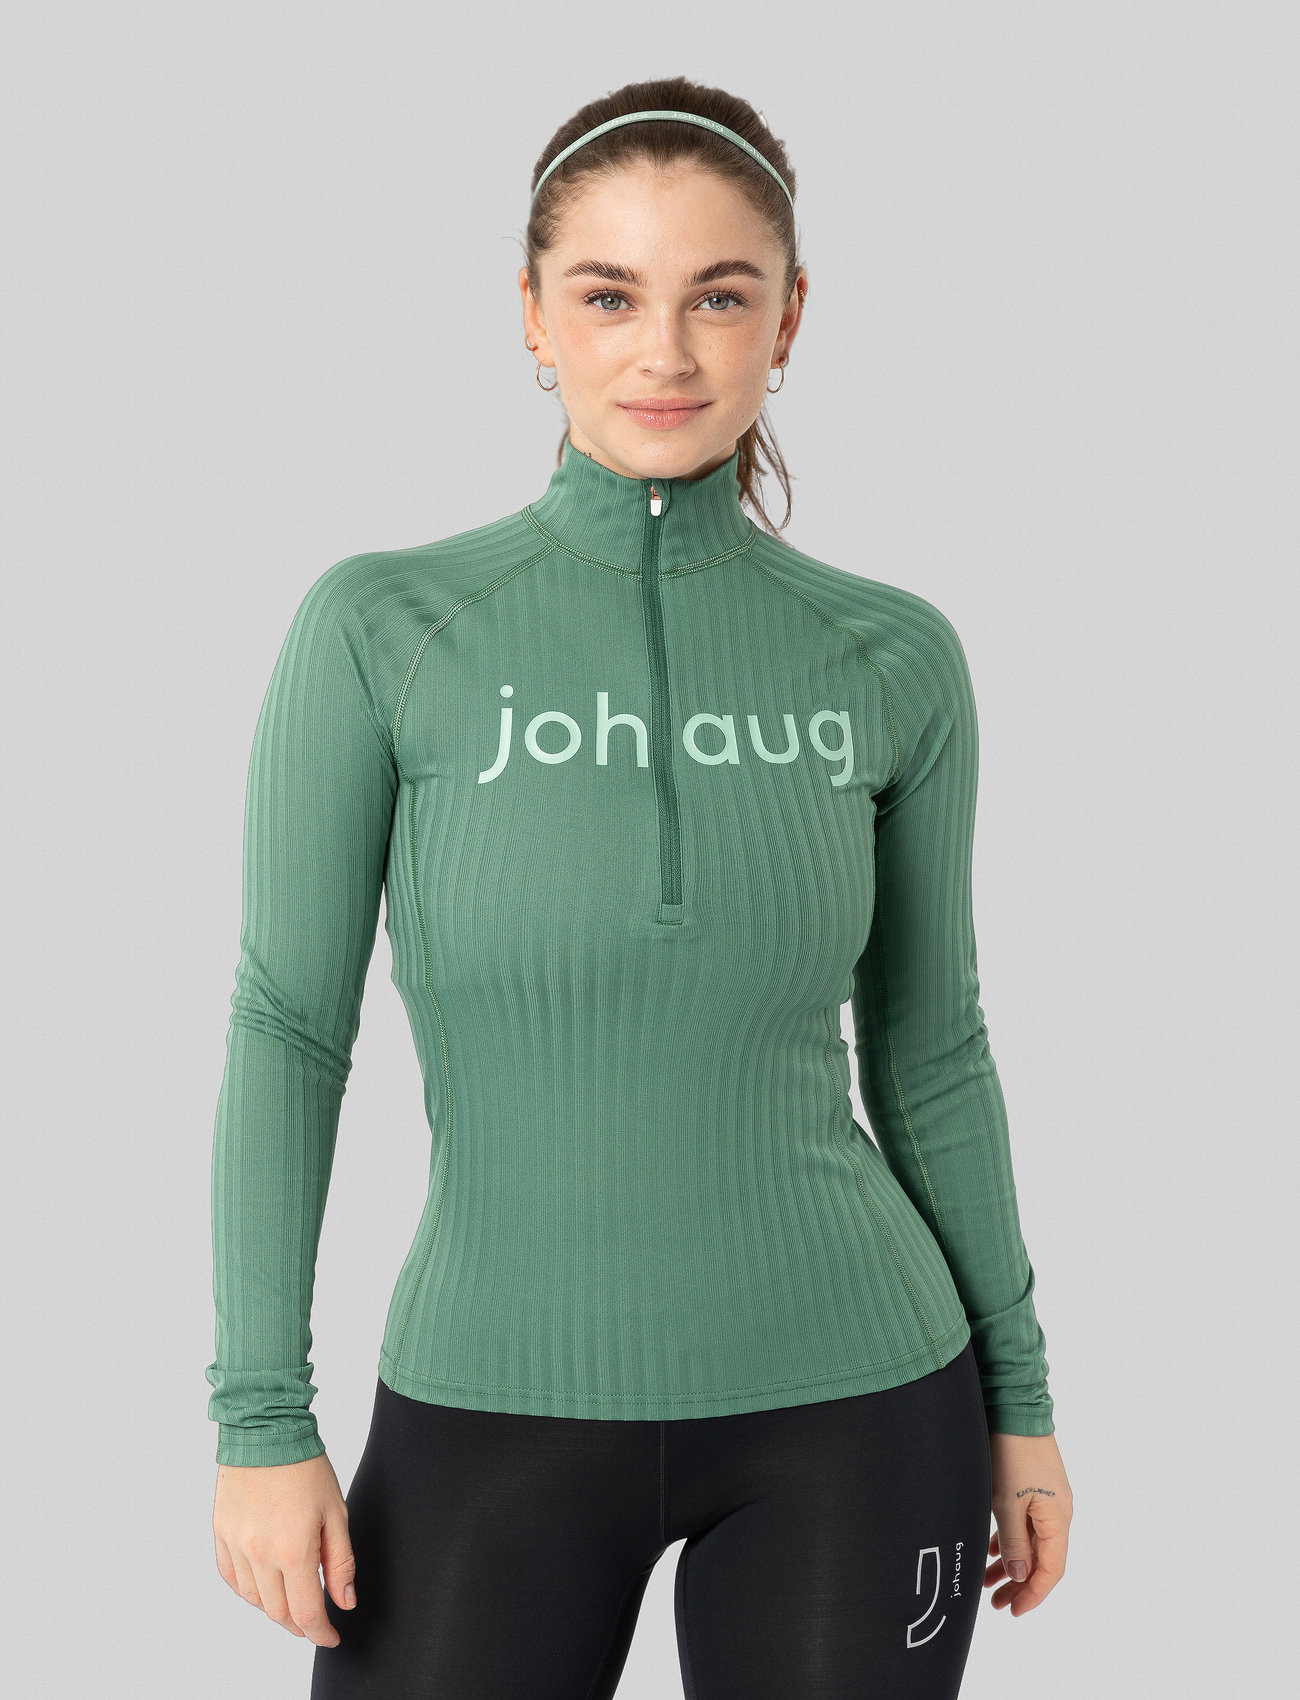 Johaug - Rib Tech Half Zip - thermo ondershirts - green - 1